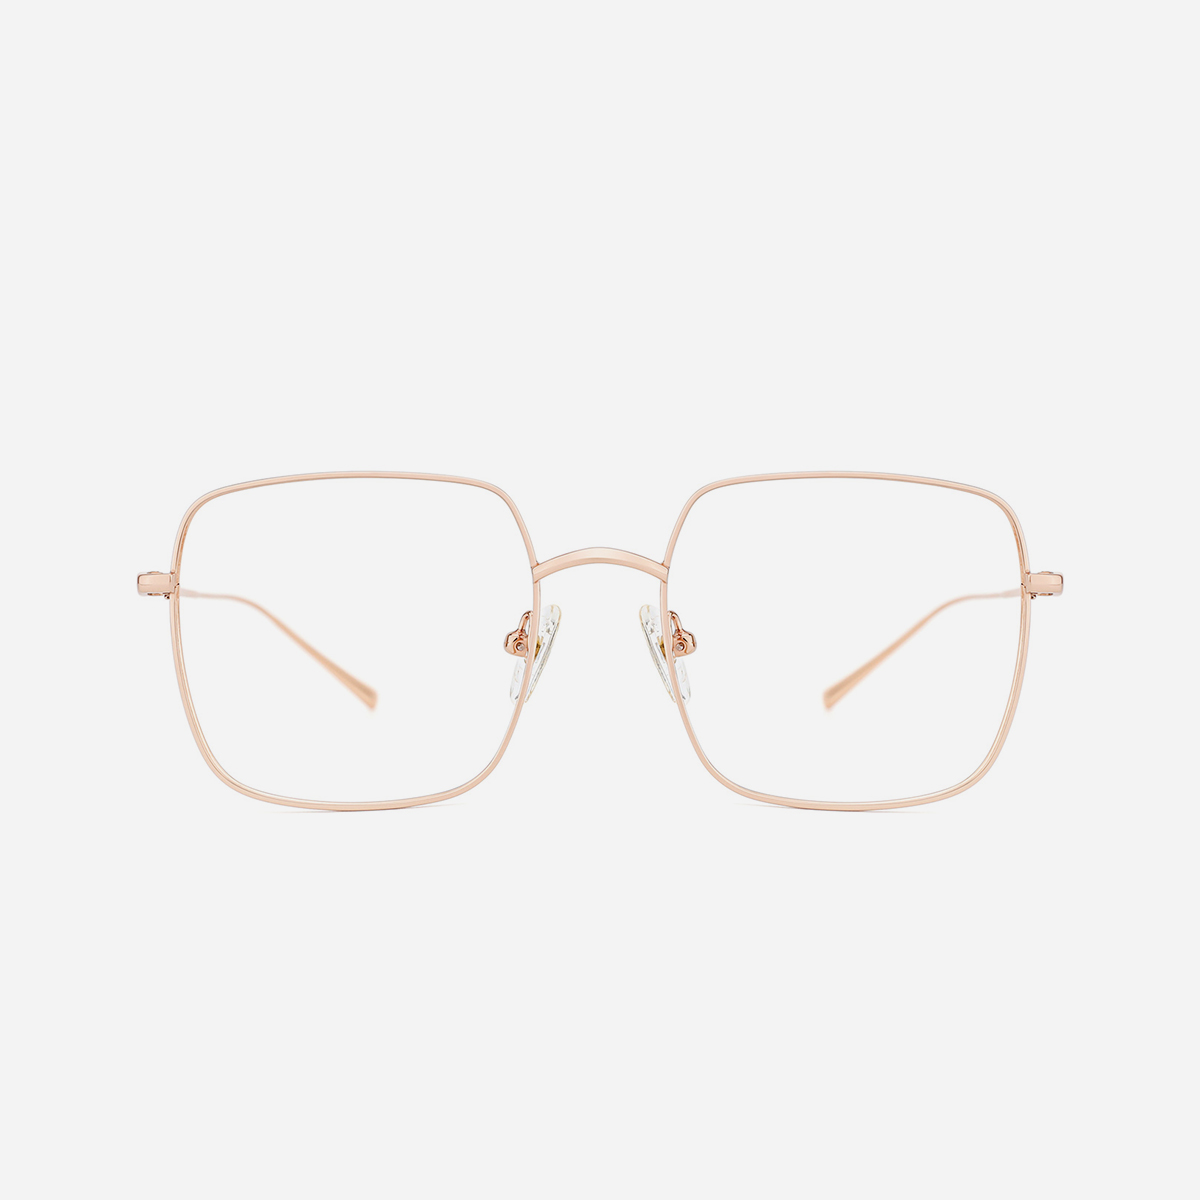 TIJN Eyewear – Shop Prescription Eyeglasses, Blue Light Filter 